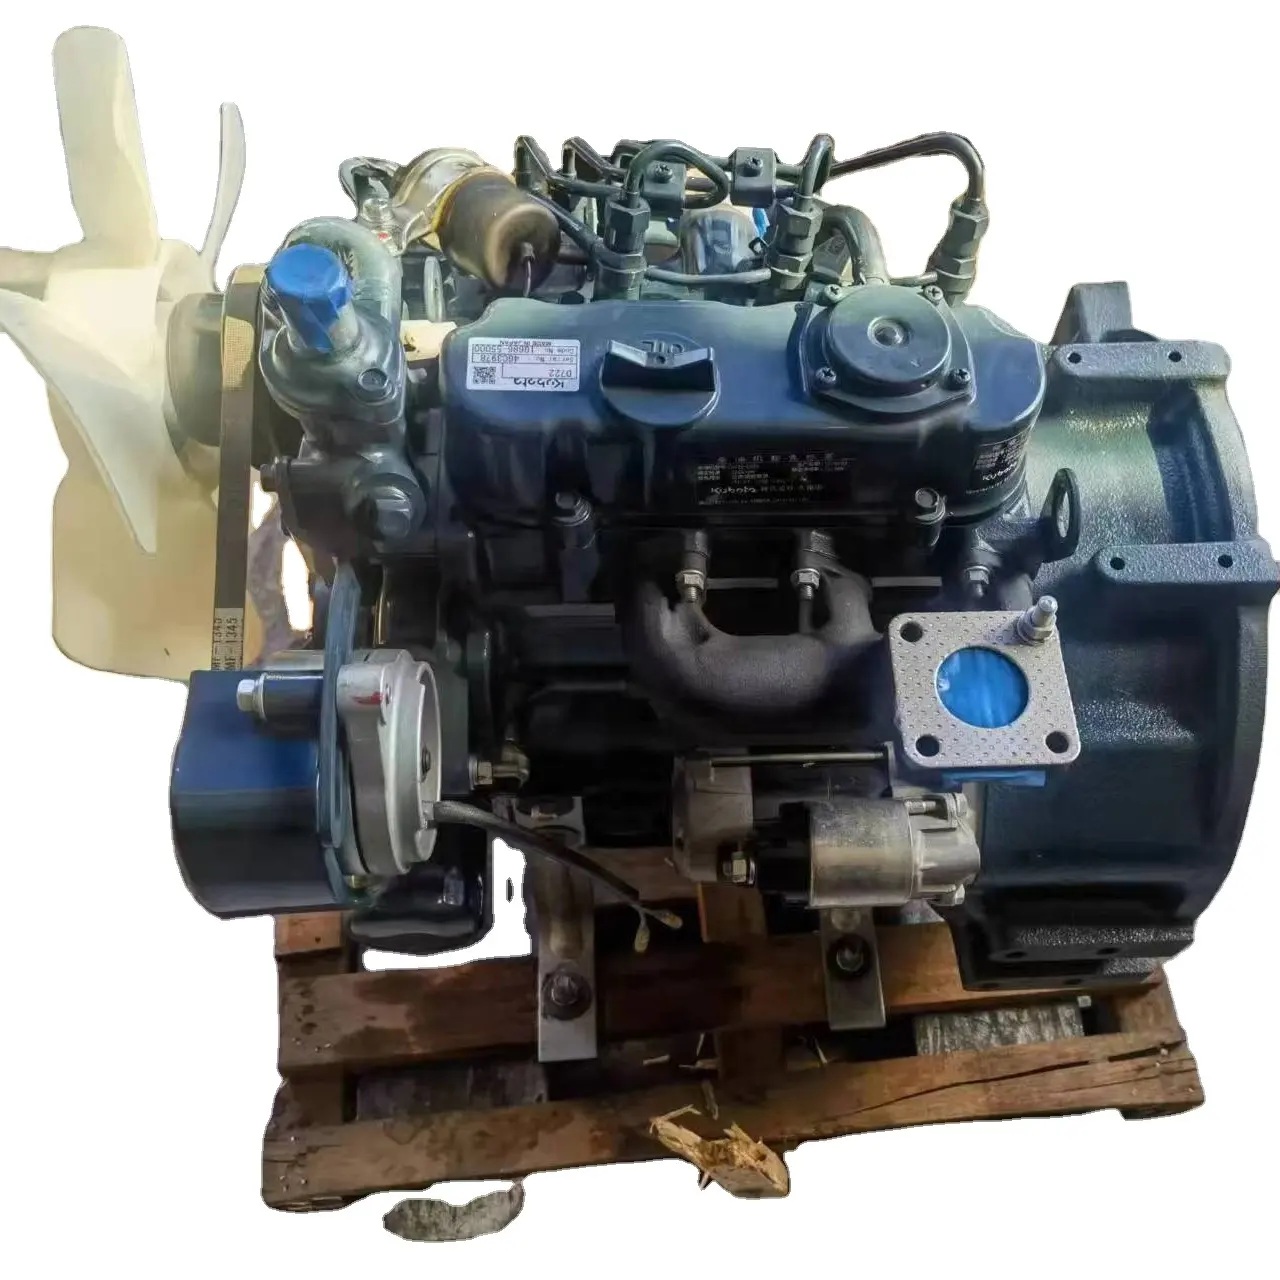 Original Kubota diesel engine assembly D722 Engine Motor Excavator Diesel Complete engine